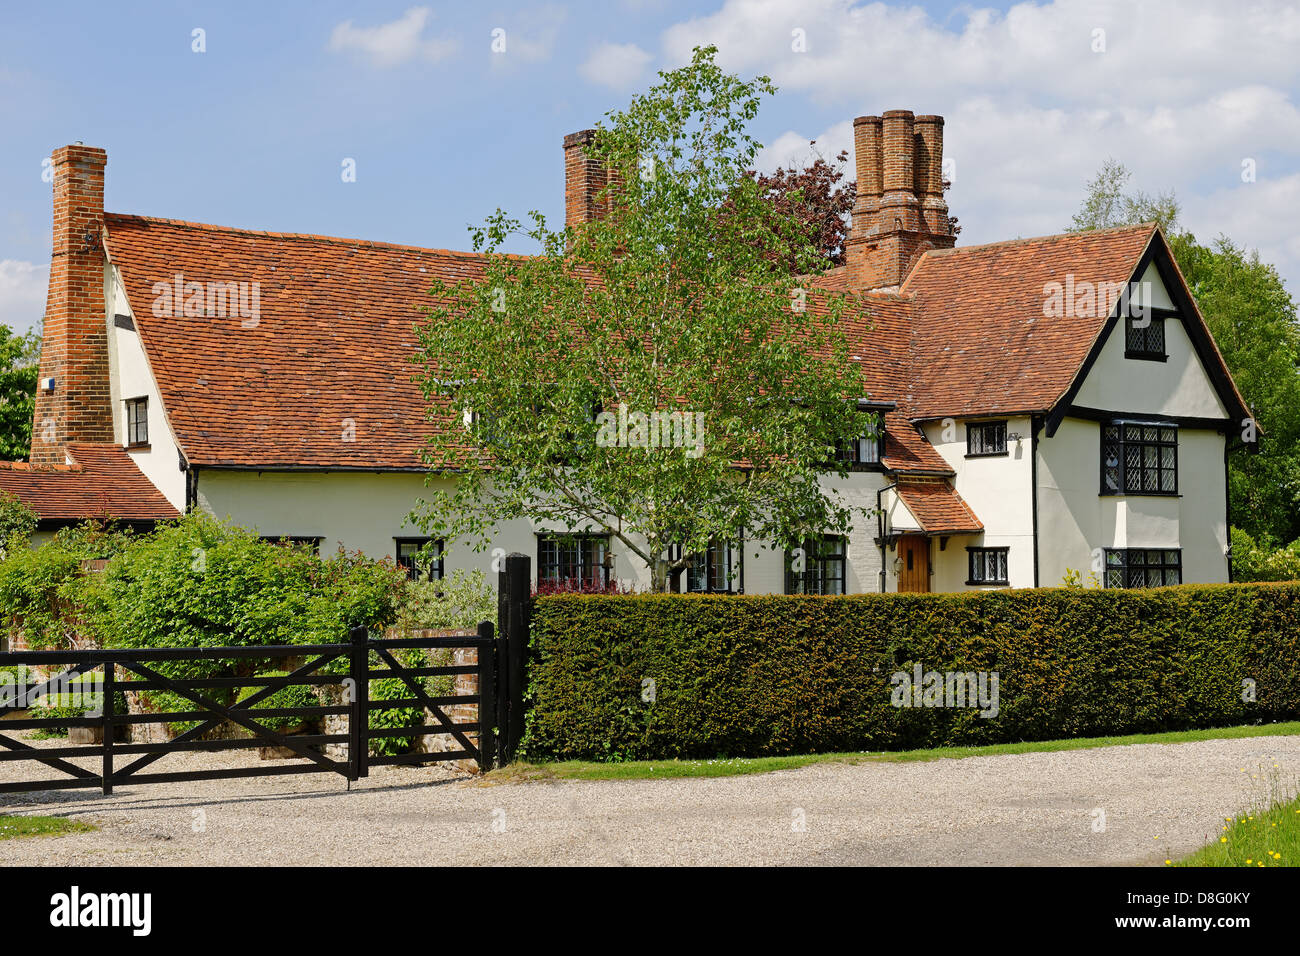 A historic Tudor manor house in an English village Stock Photo